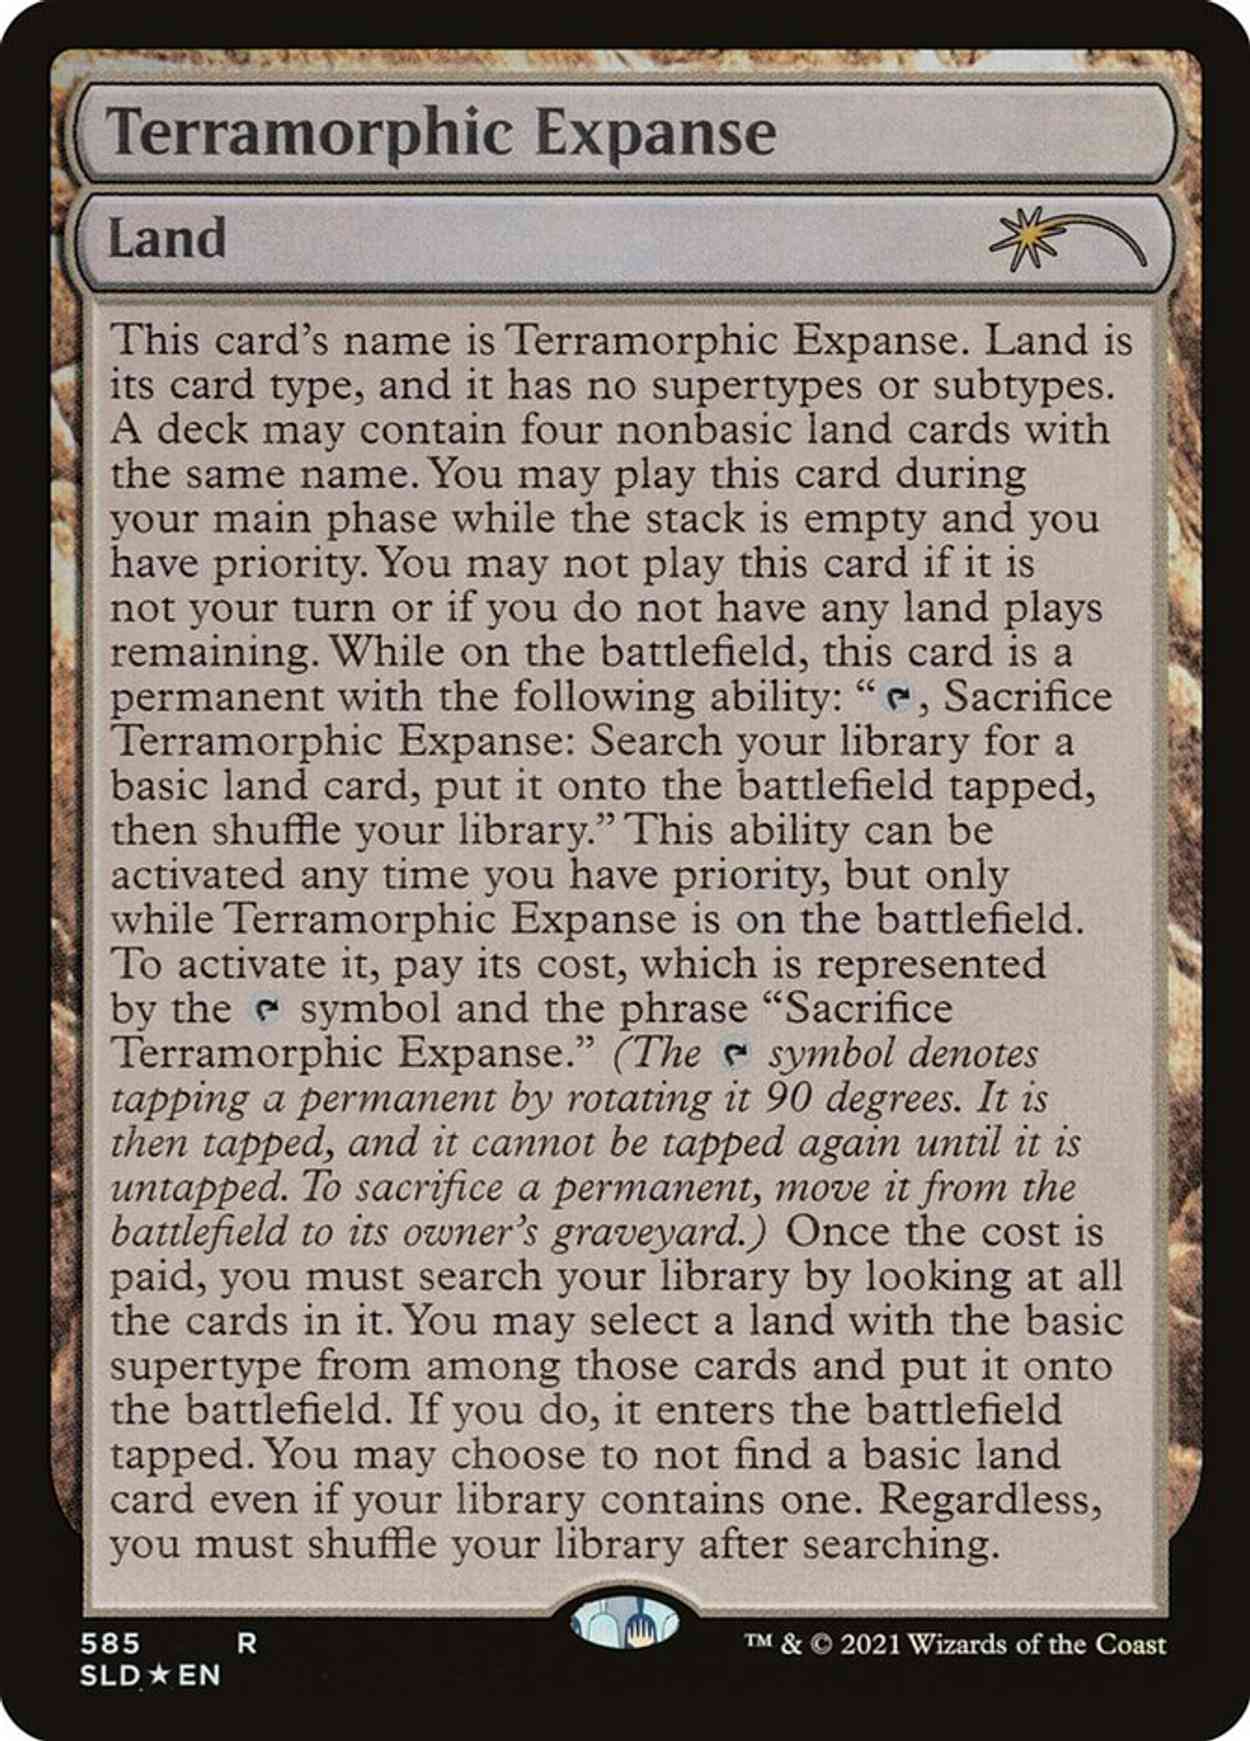 Terramorphic Expanse (Full-Text Land) magic card front